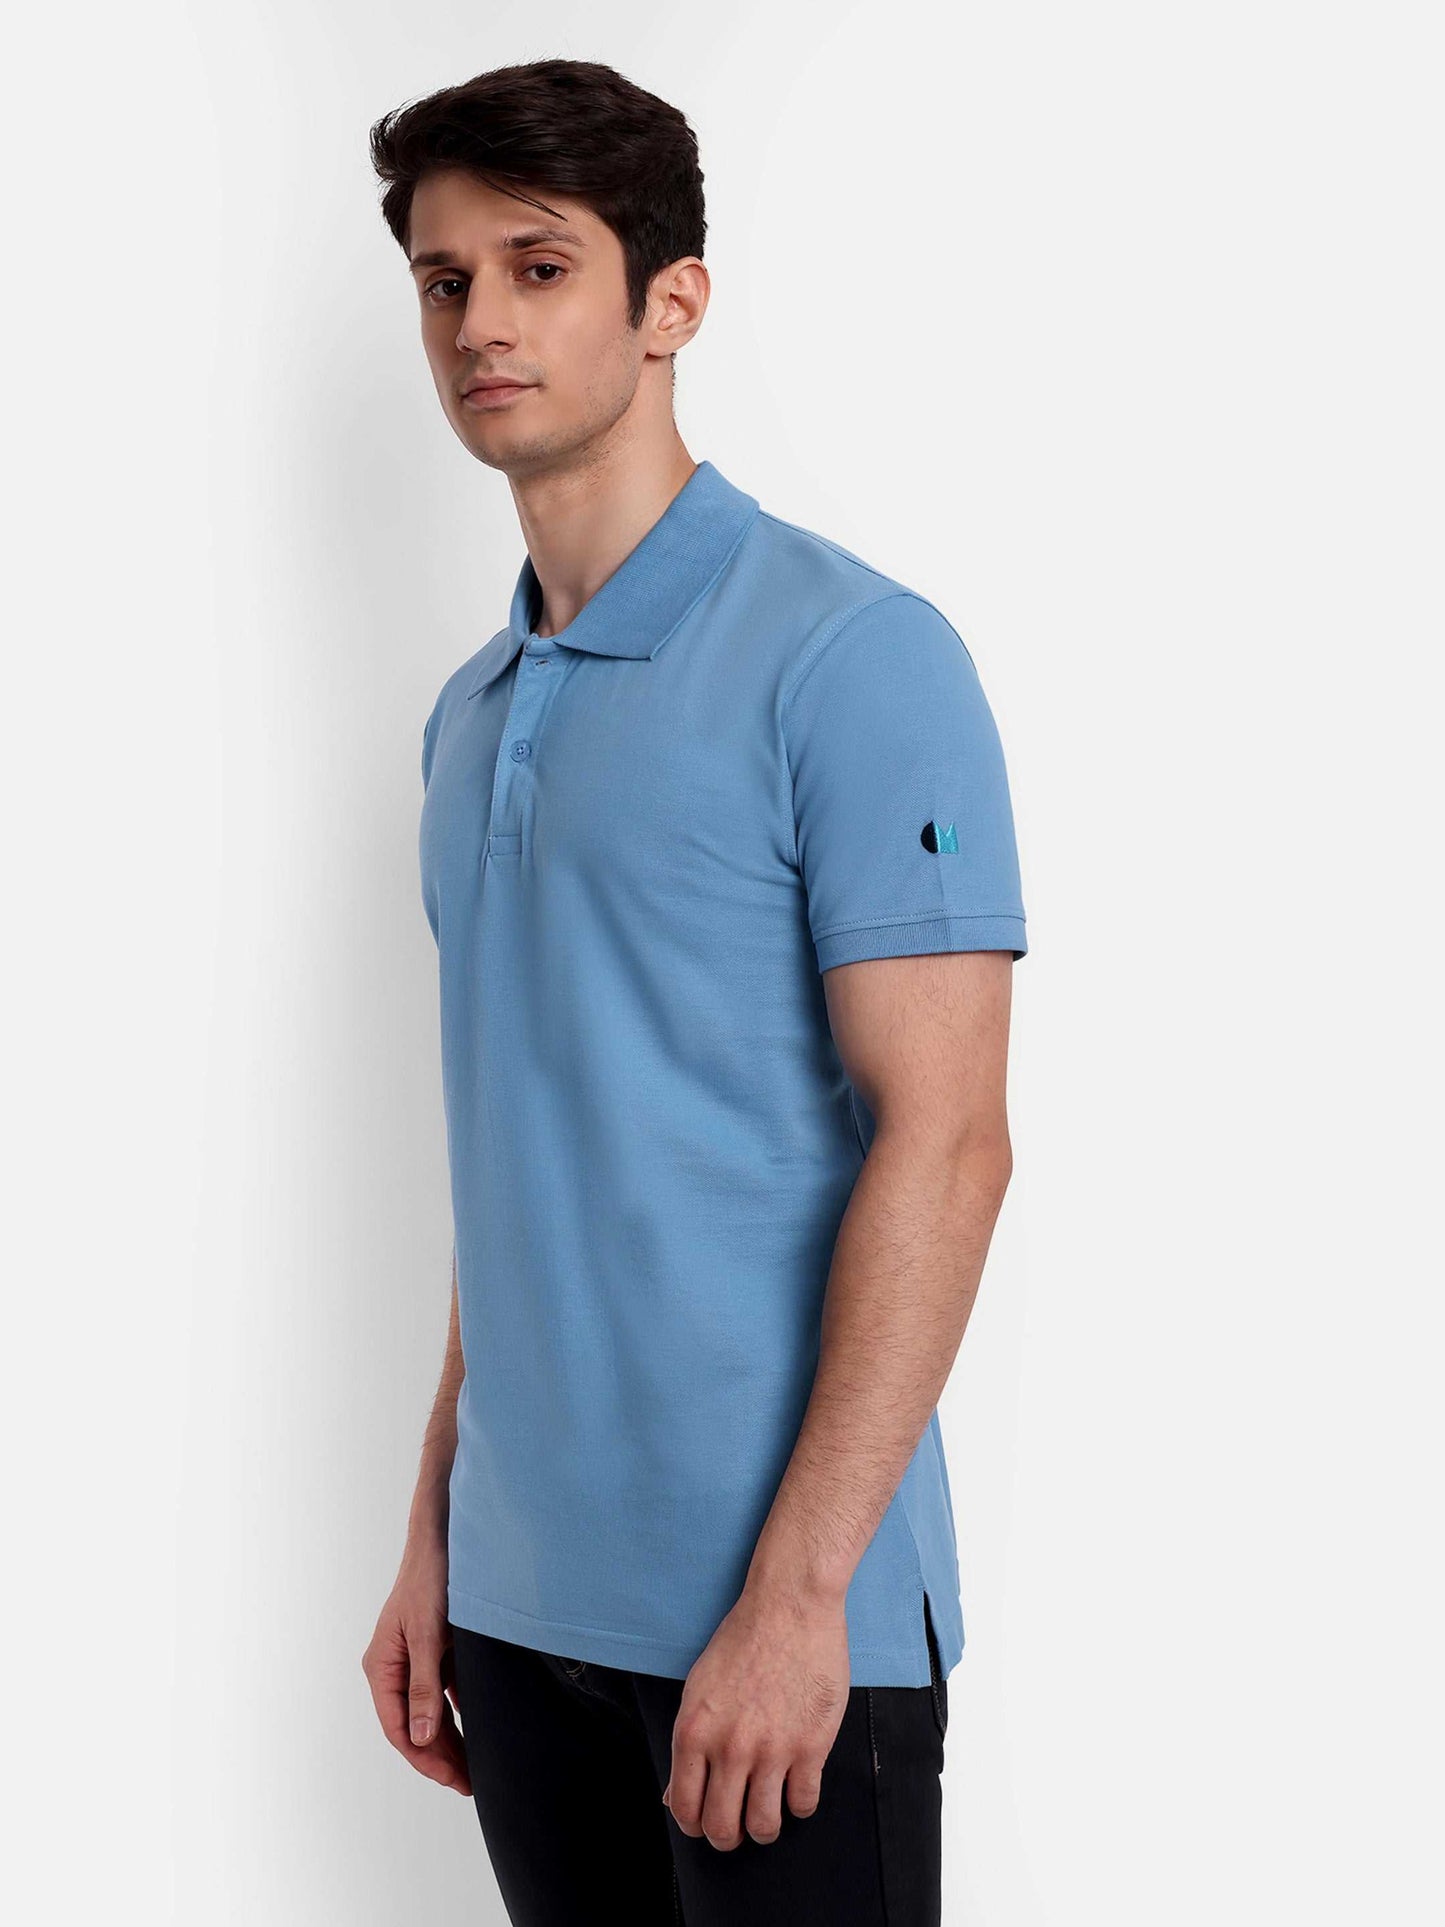 Buy blue t-shirts polo shirts online